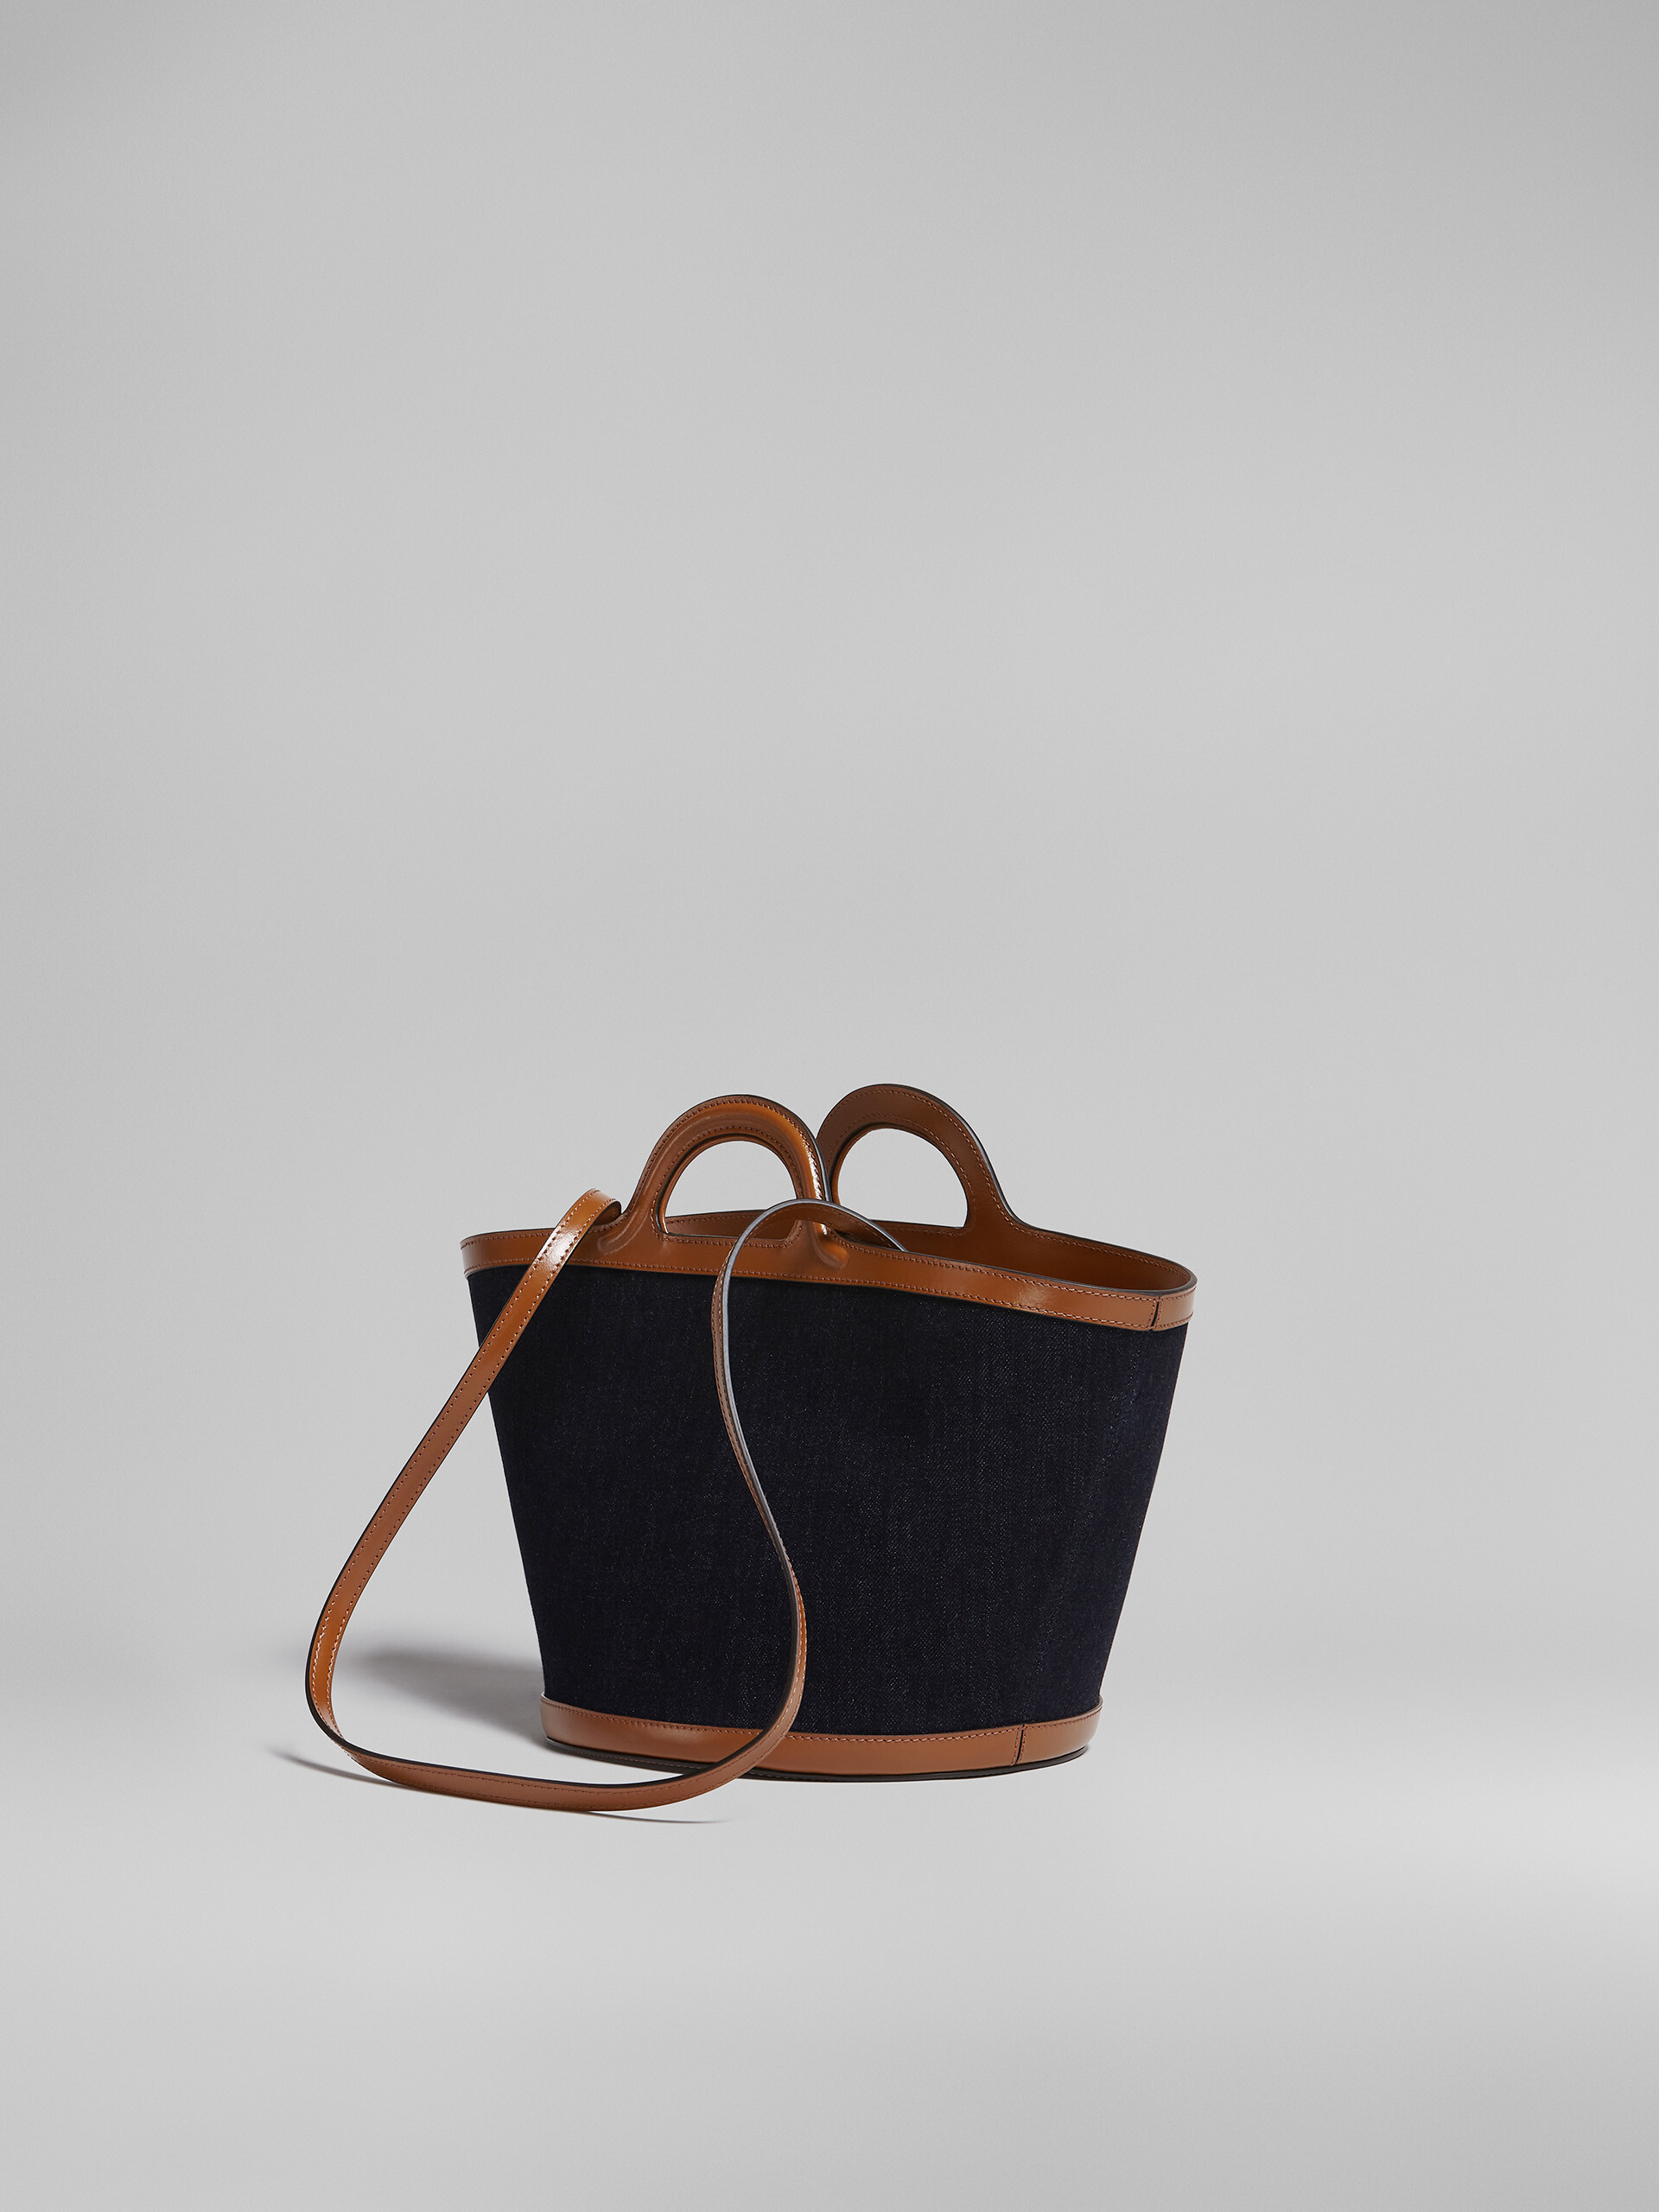 TROPICALIA small bag in denim and leather - Handbag - Image 3